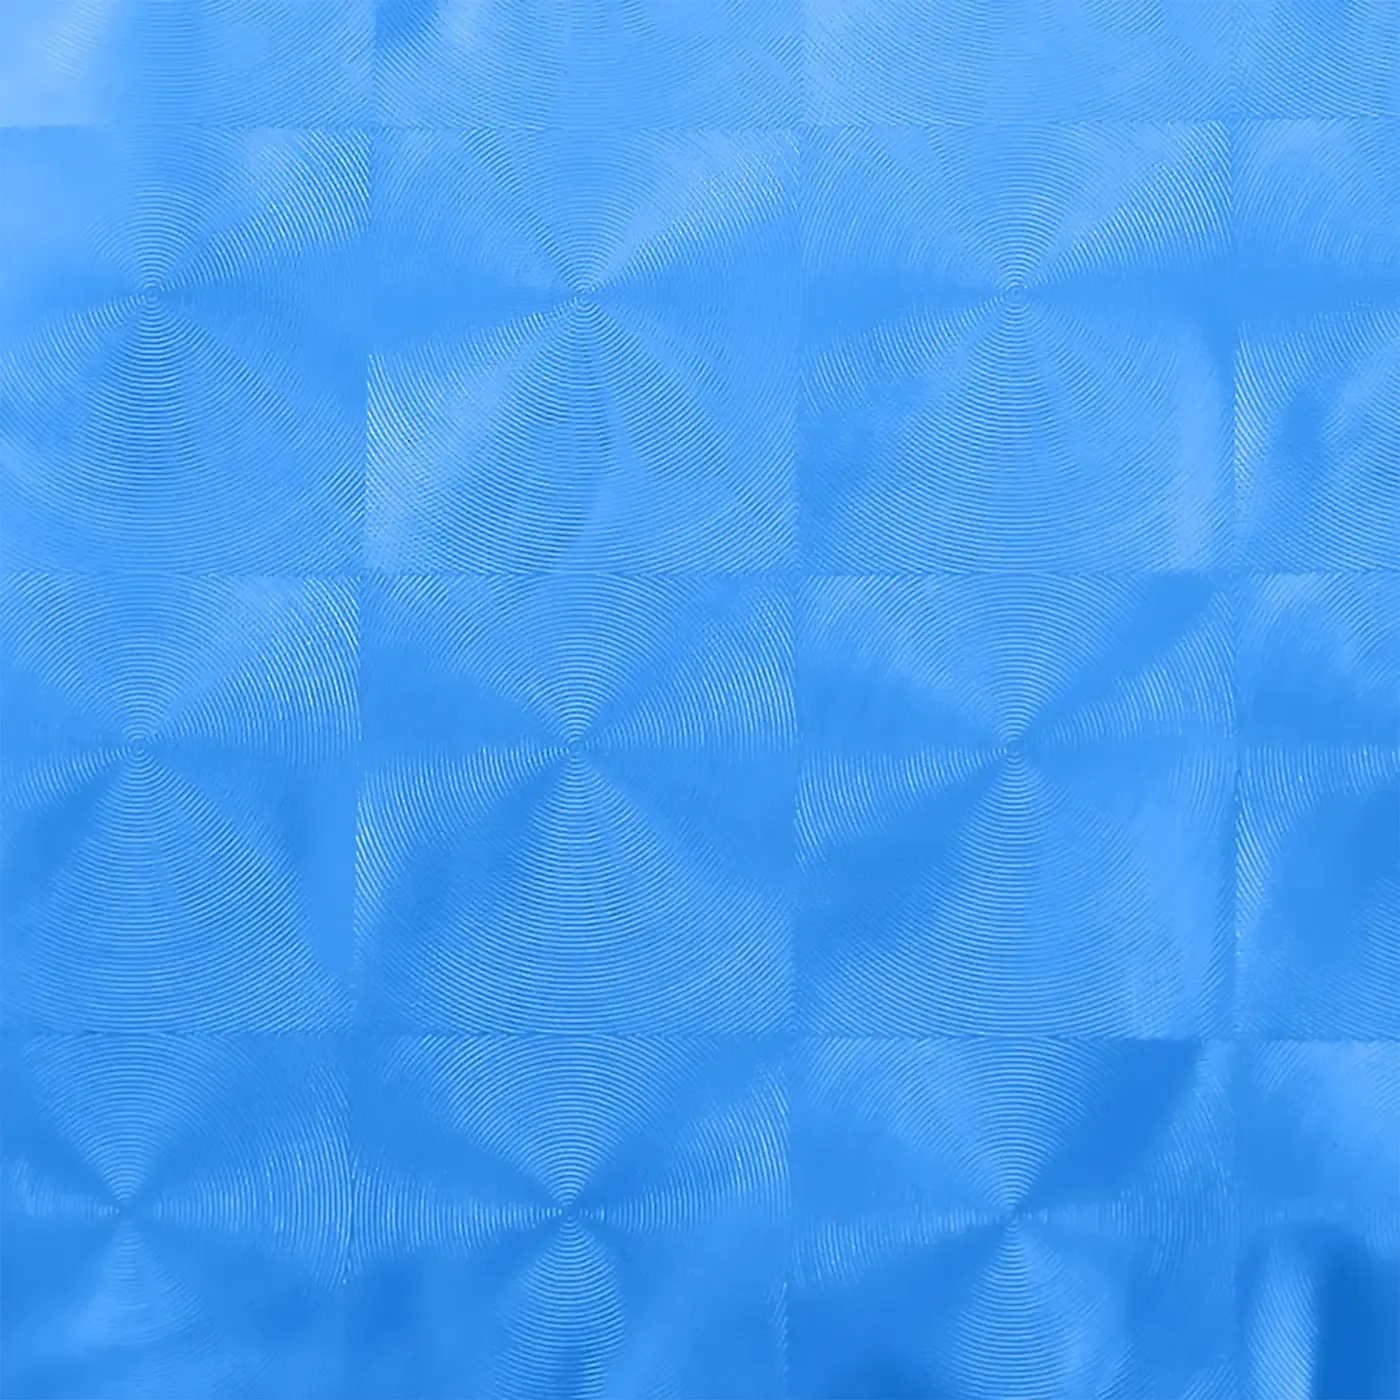 Cortina de Baño PVC 150x180 cm KLINE Azul